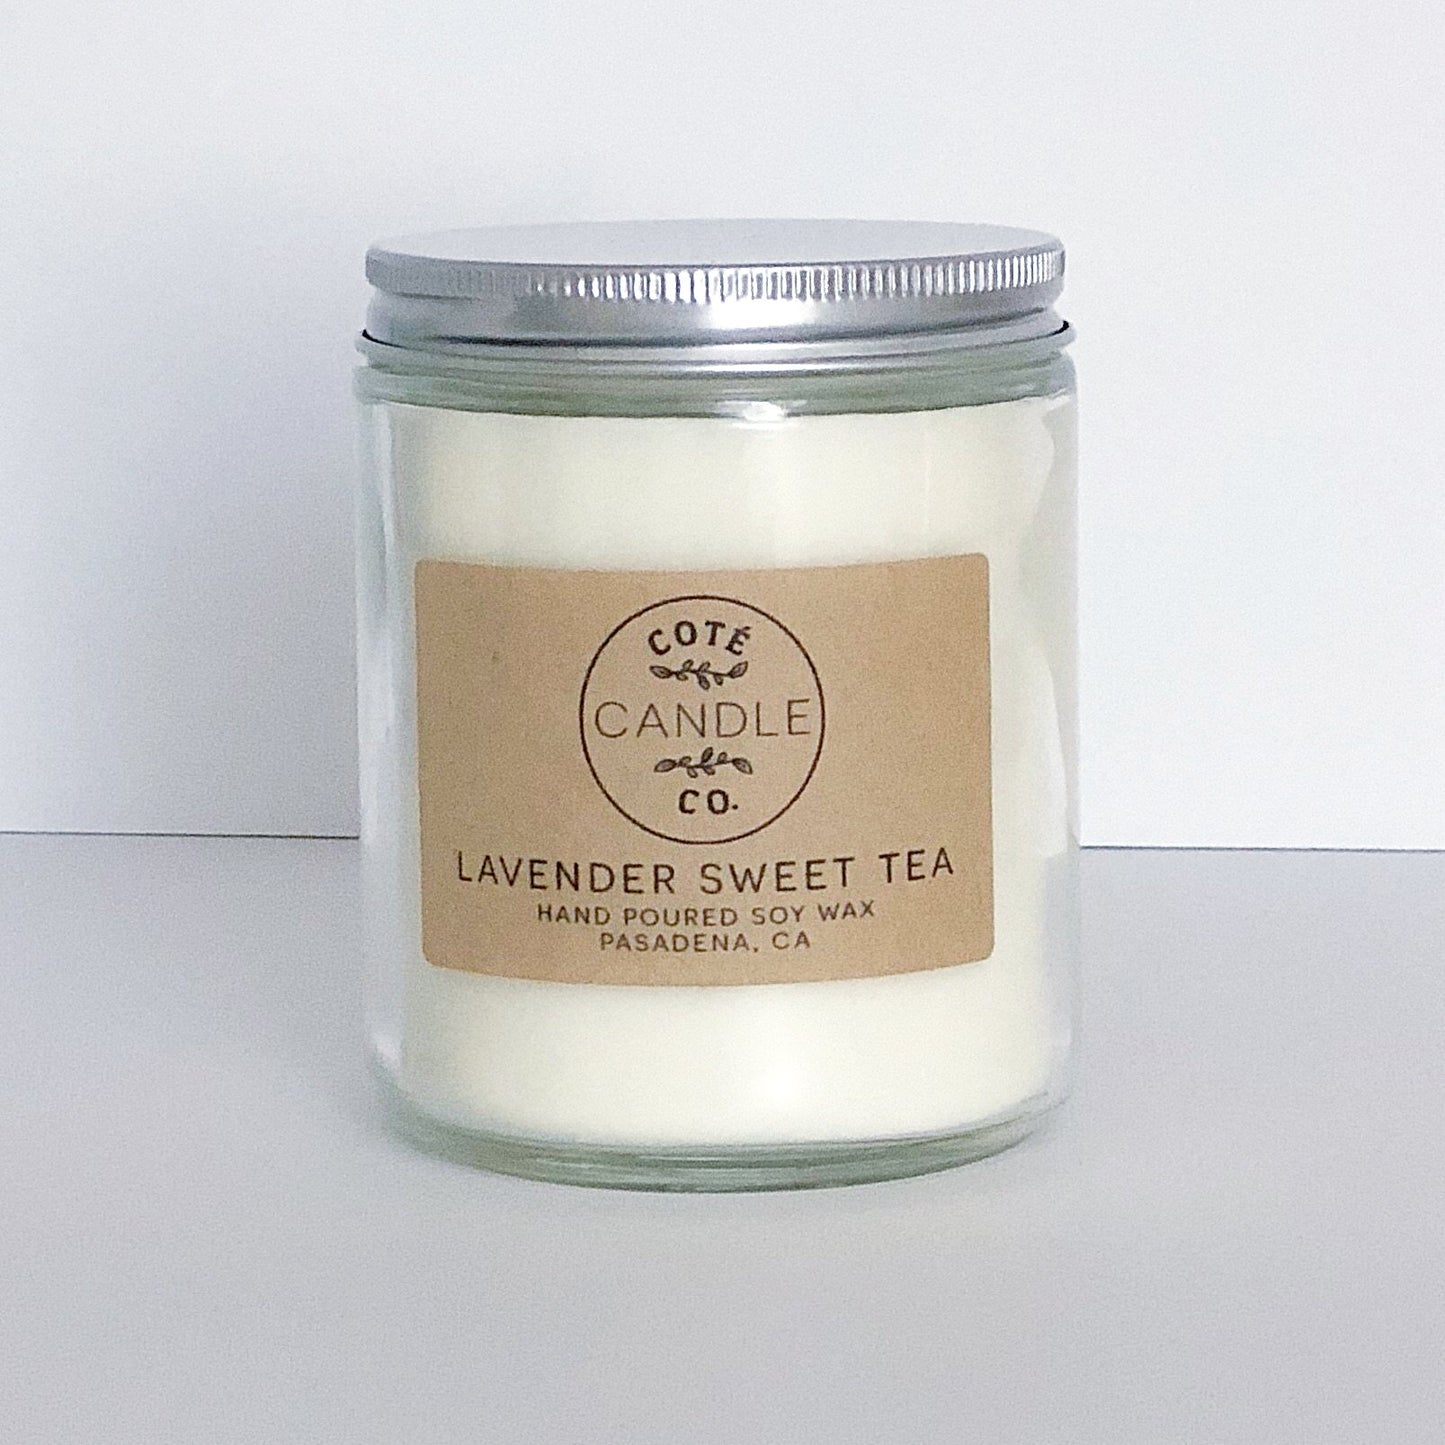 Lavender Sweet Tea Soy candle - Favor & Fern